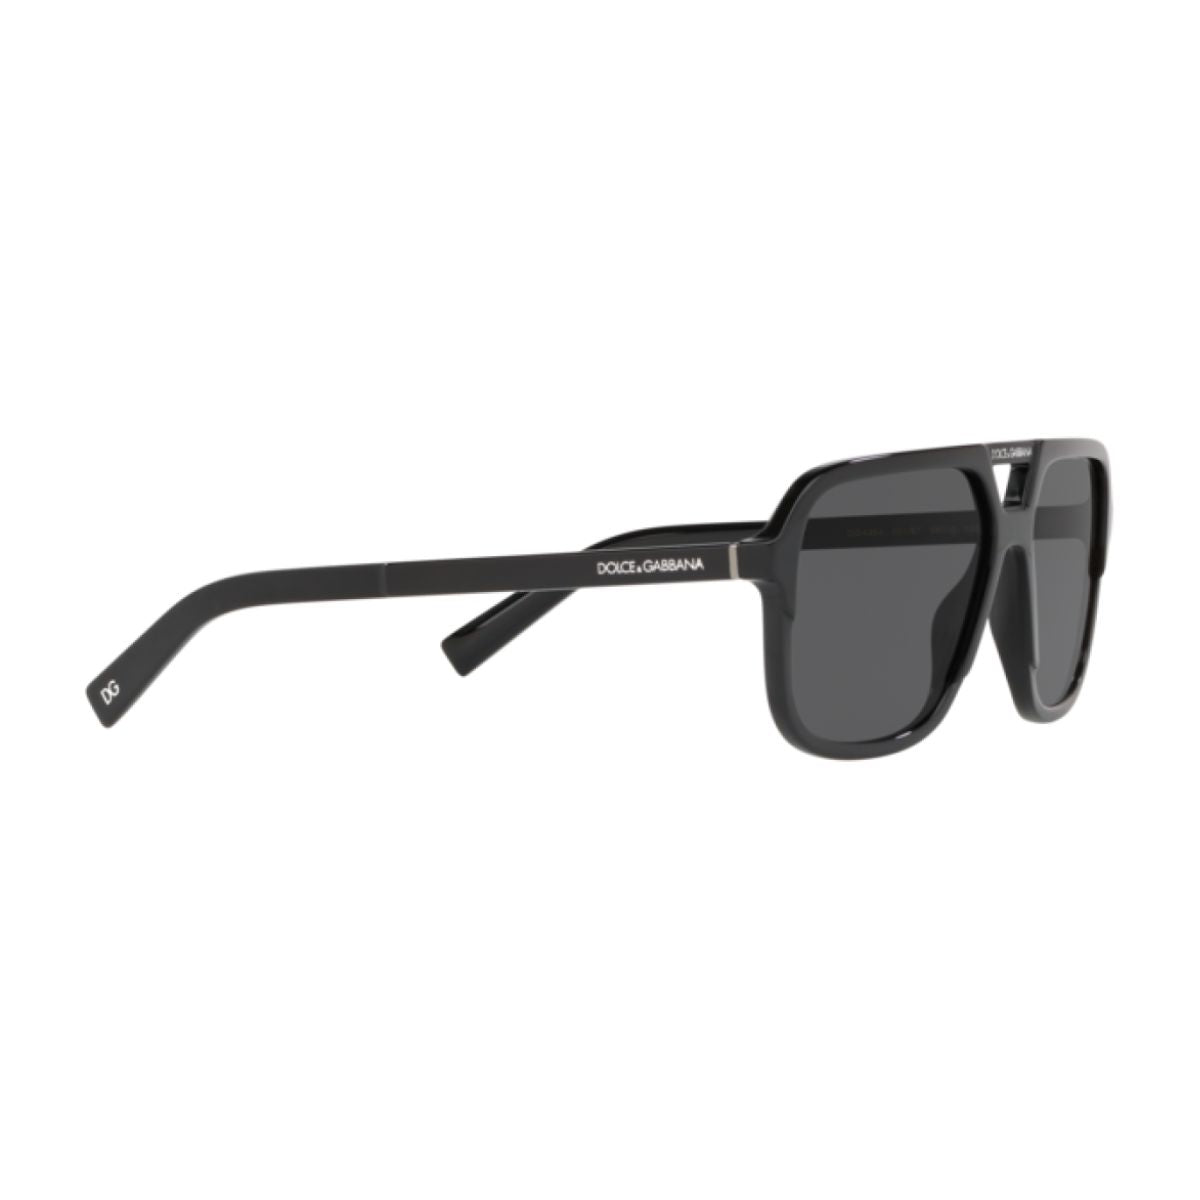 "Dolce & Gabbana DG 4354 501/87 Sunglass  Men's Eyewear with UV Protection Sunglass At Optorium"
